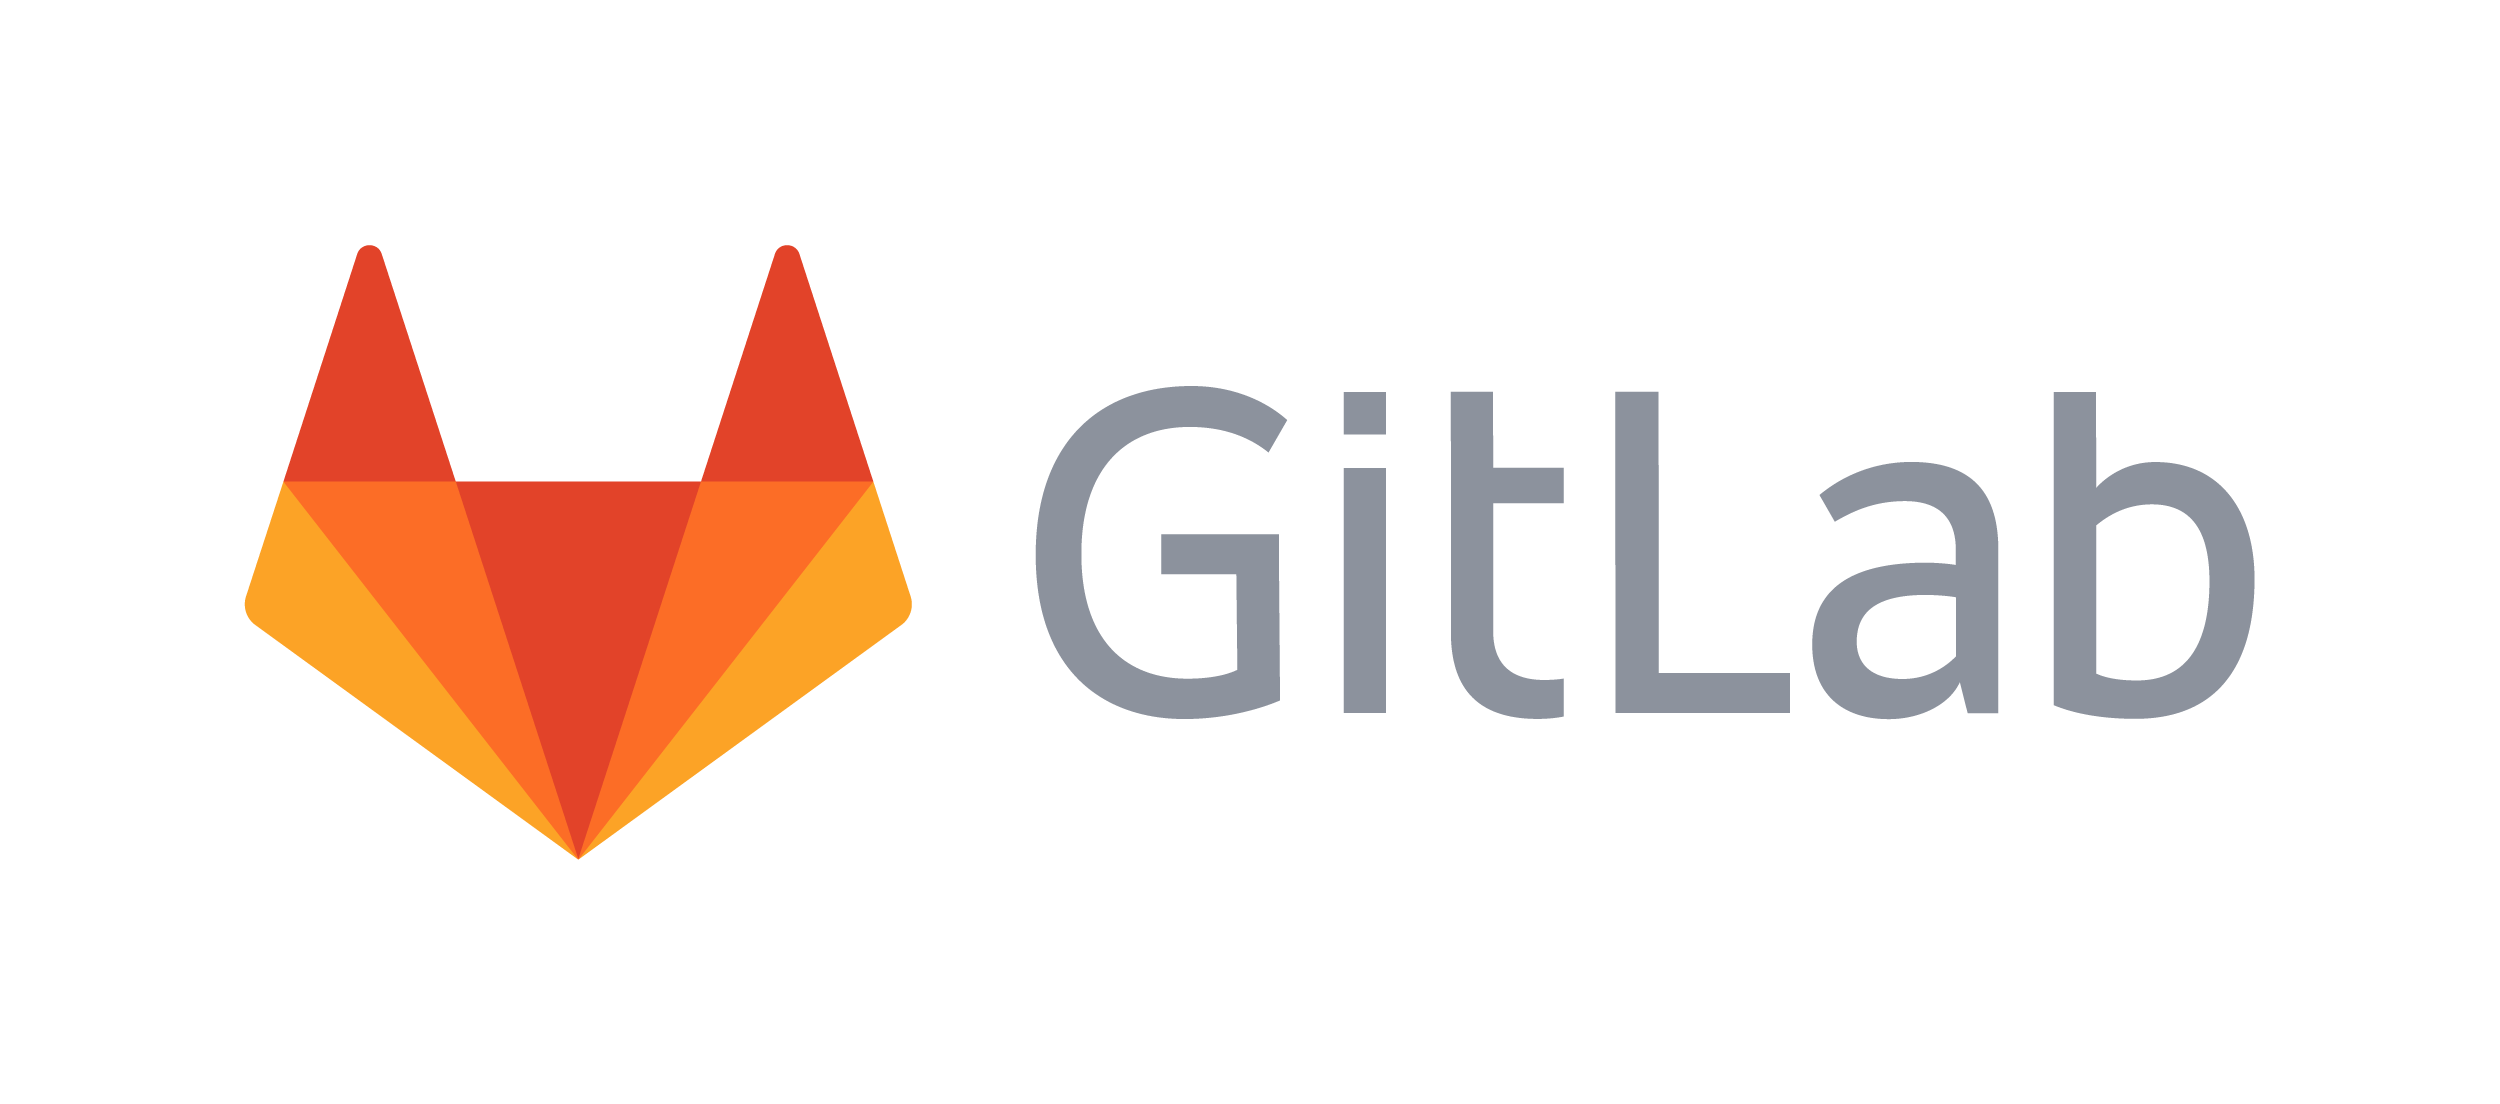 Configuration management tools in DevOps. The logo of GitLab CI